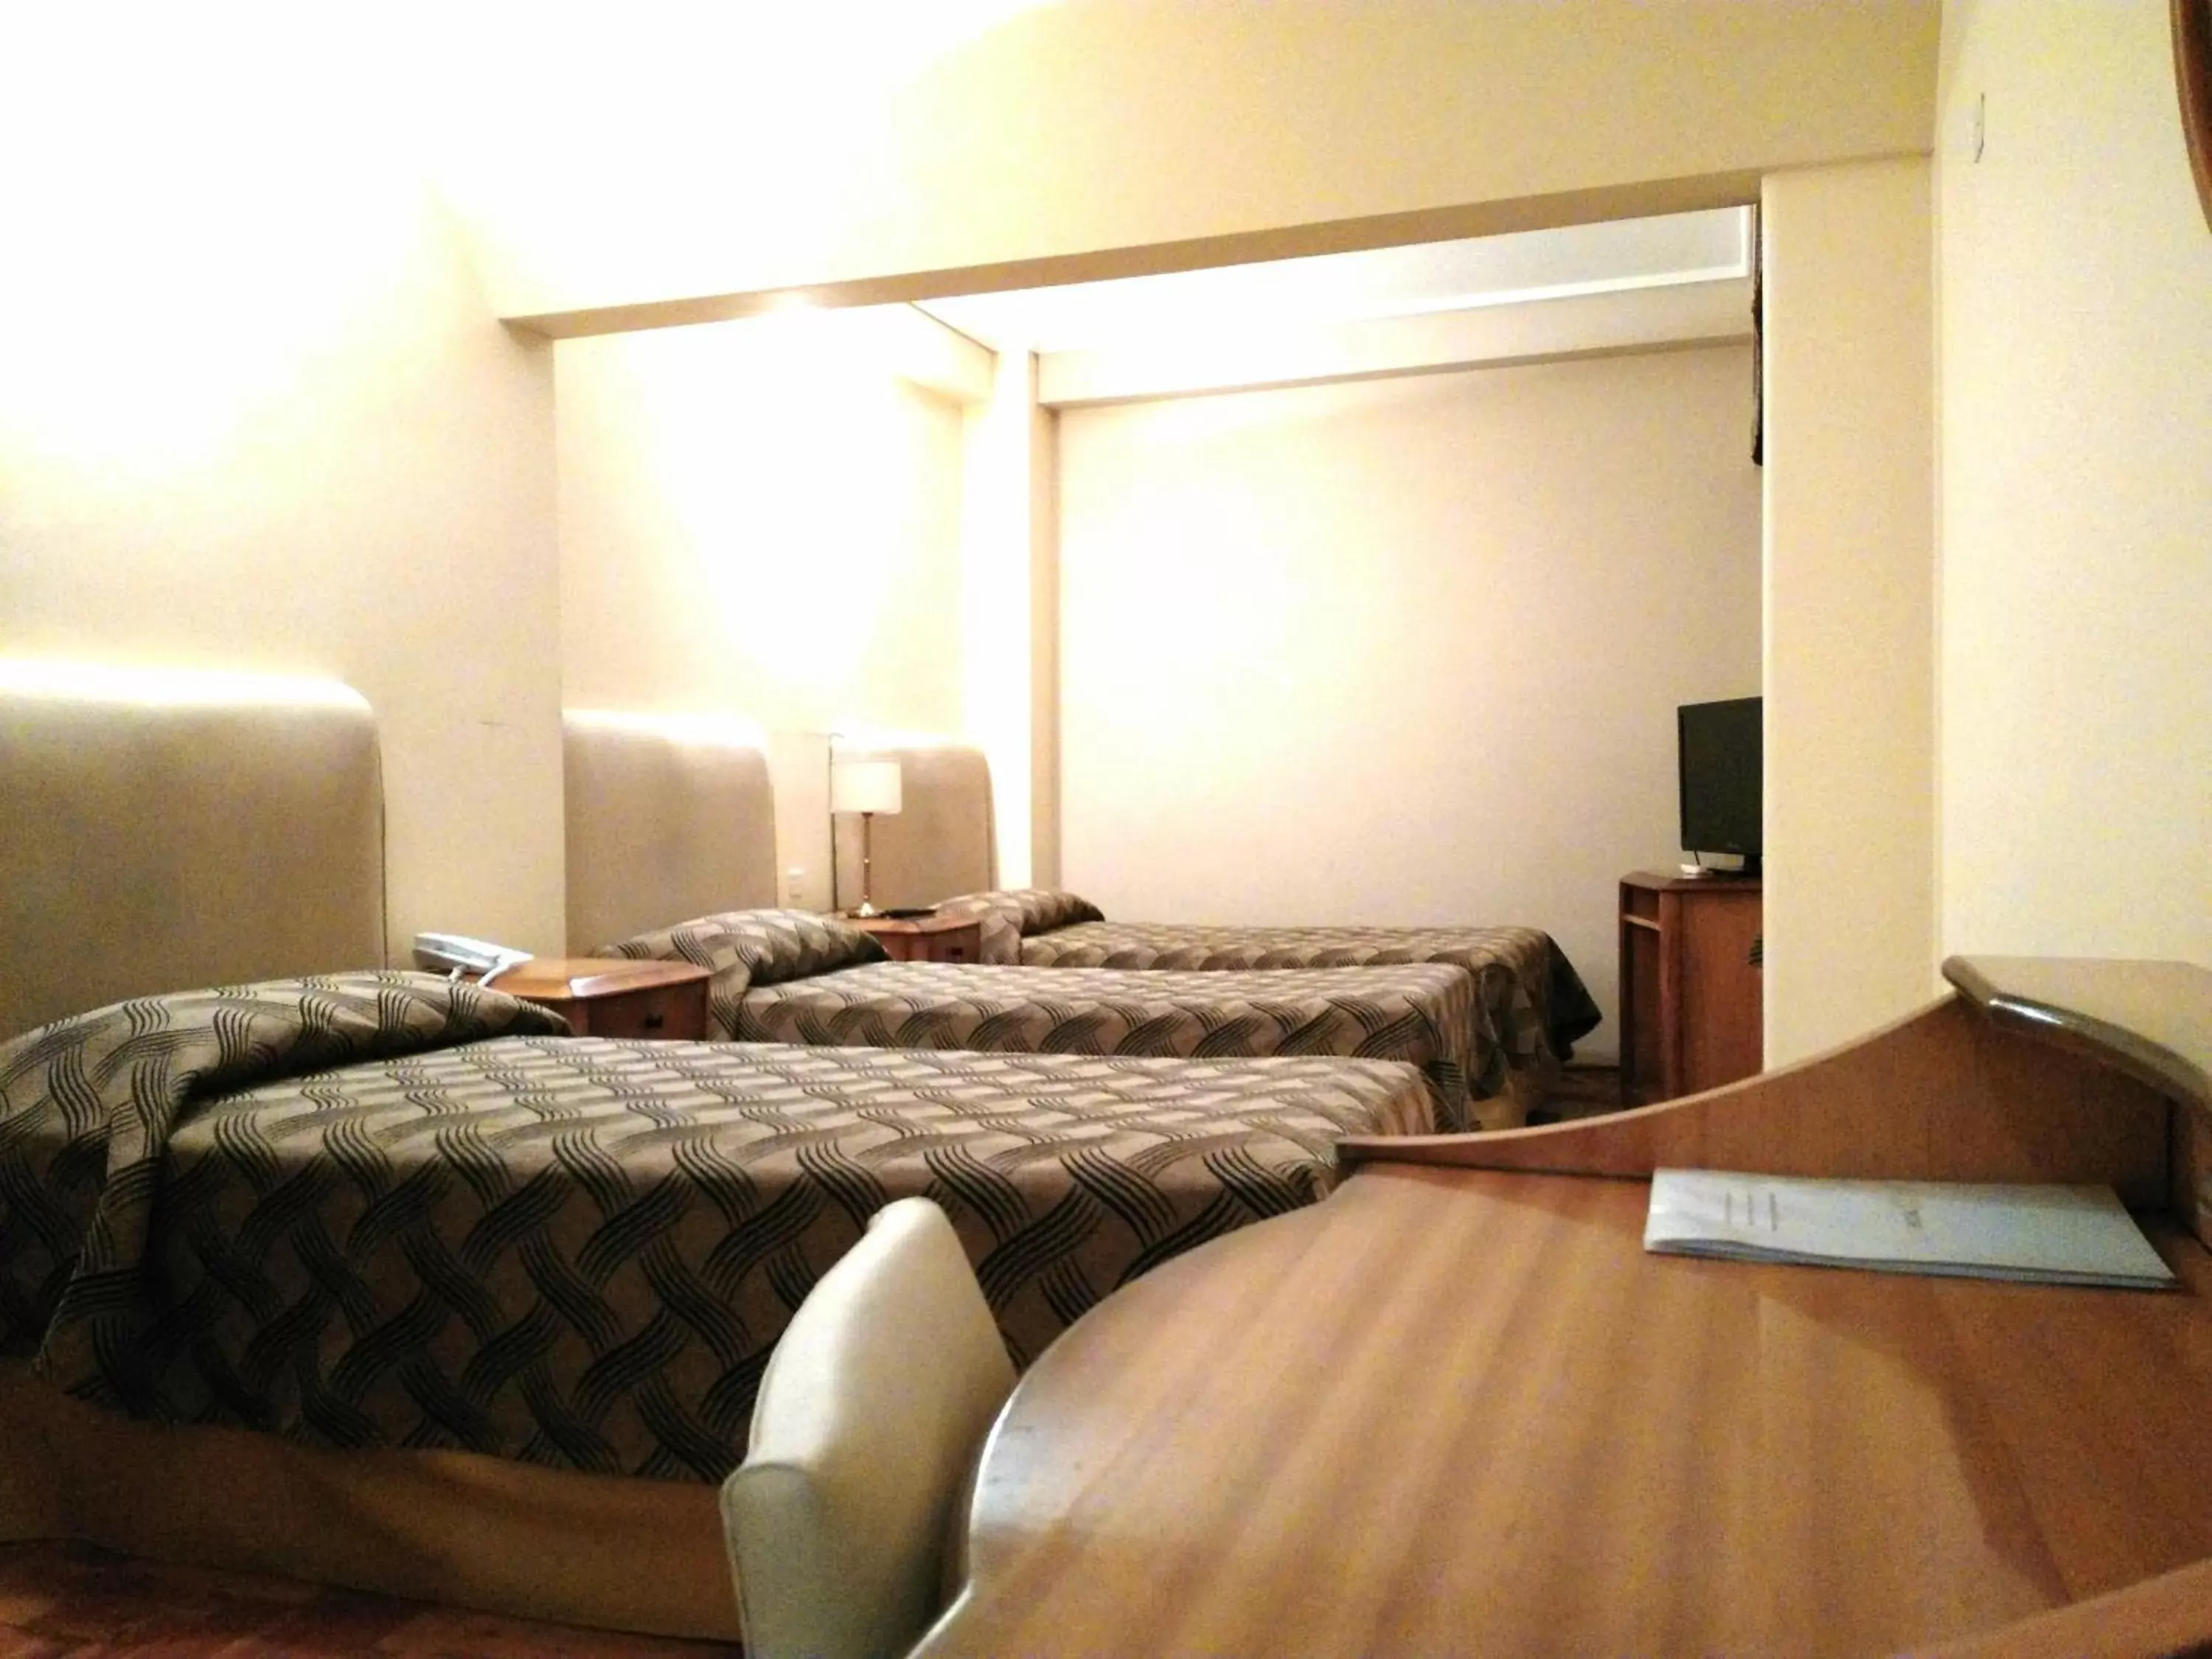 Bedroom, Room Photo in Tritone Hotel